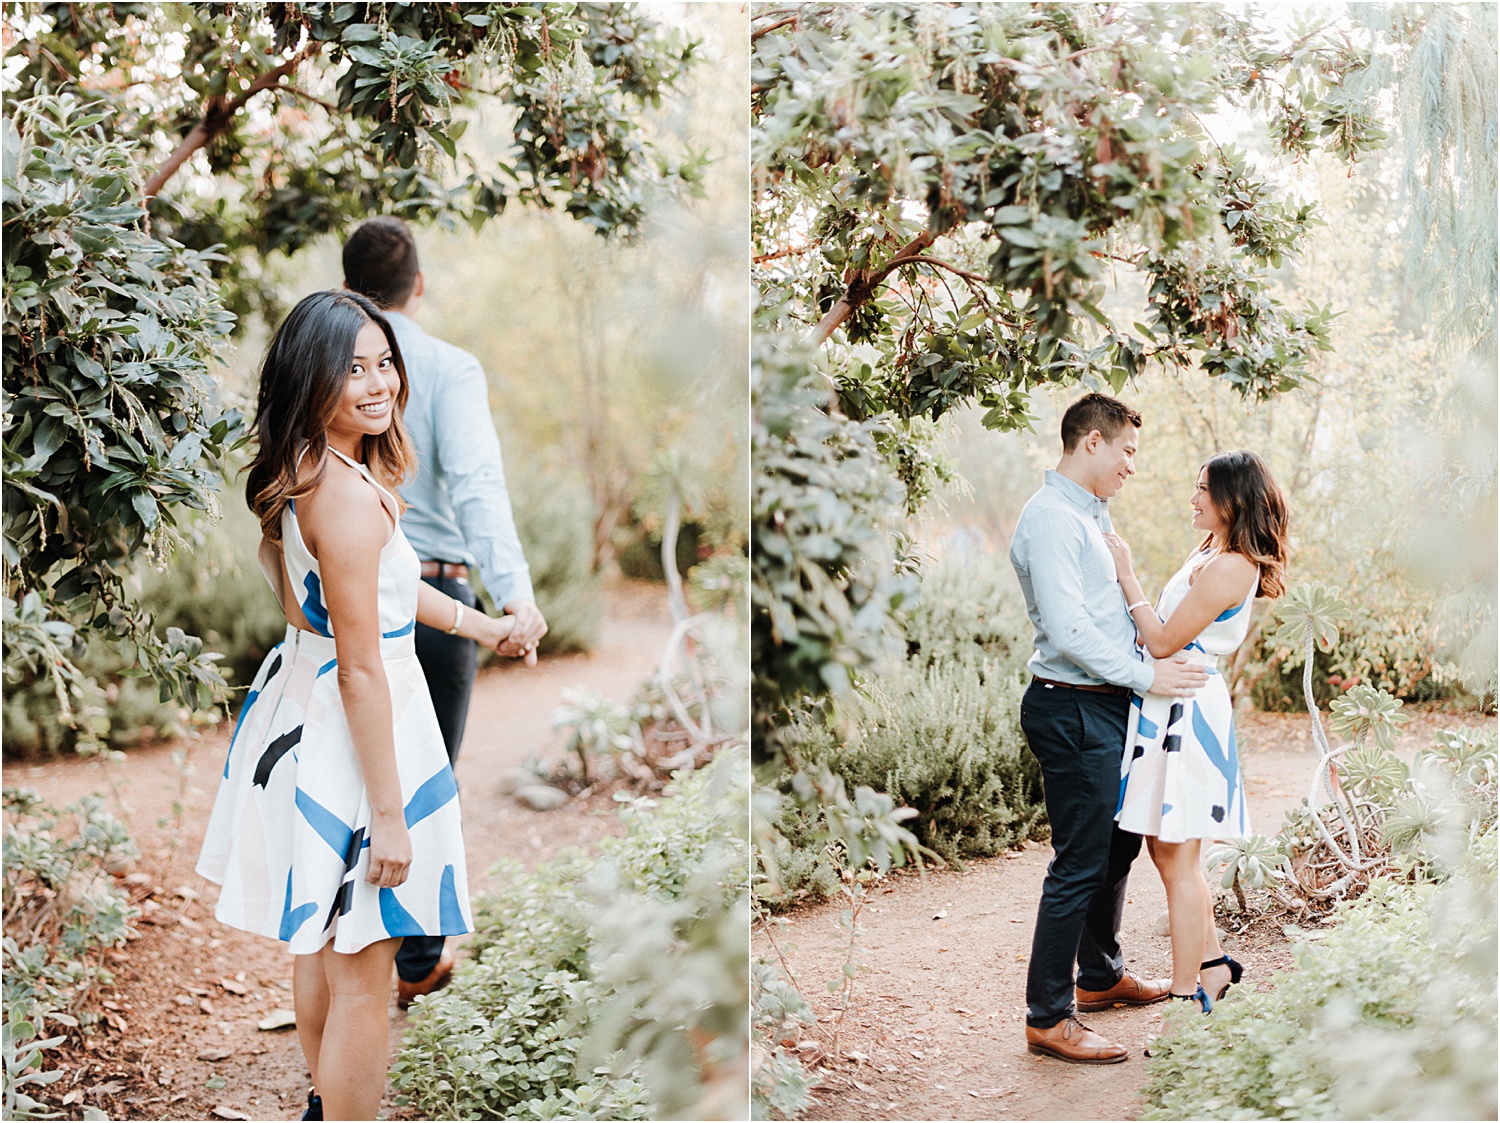 Bianca+Grant - Arlington Gardens - Pasadena - Engagement_0015.jpg